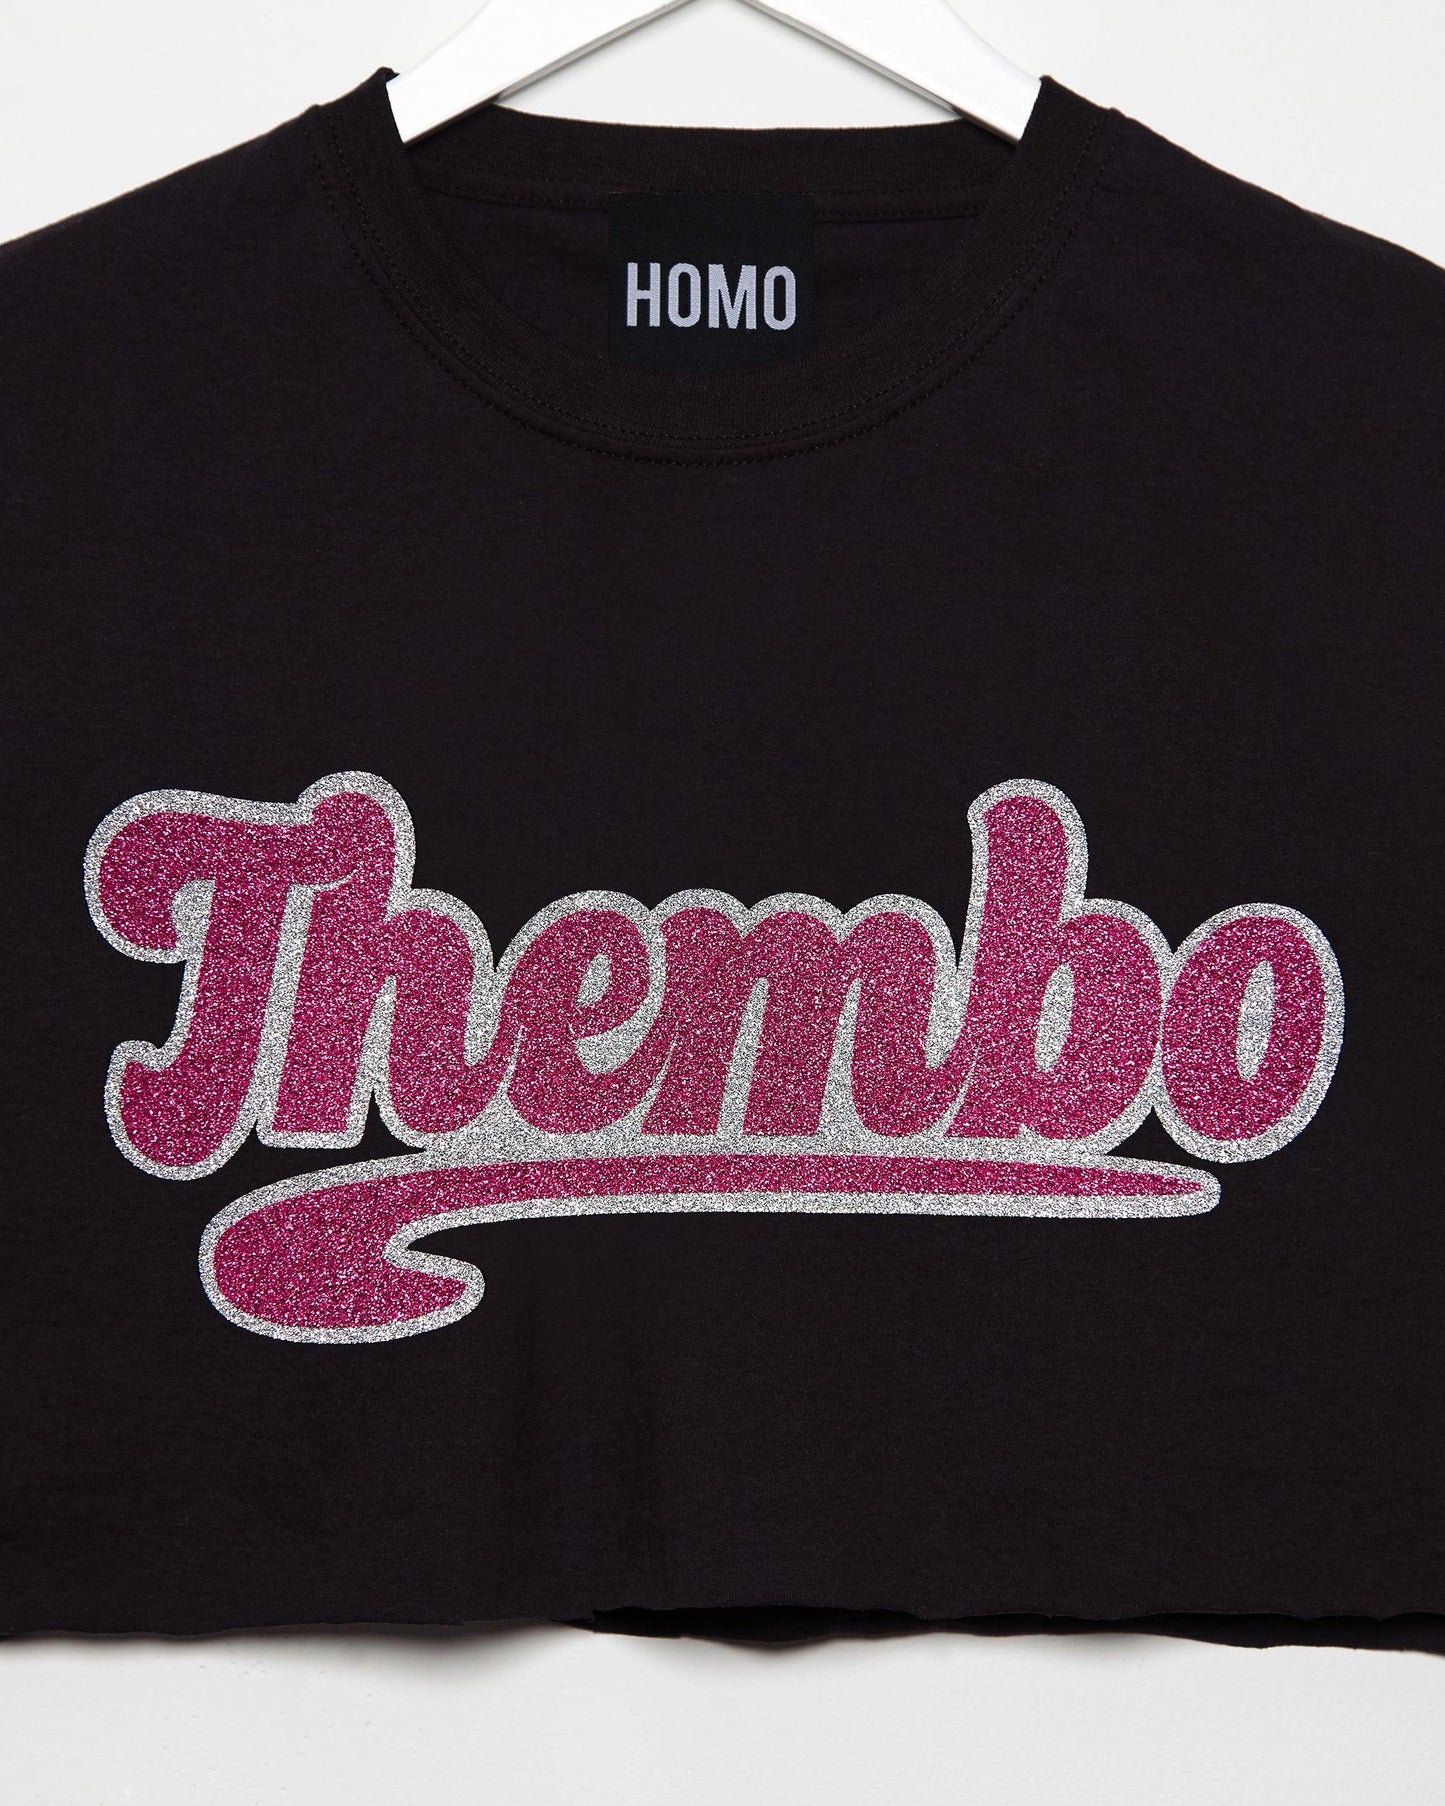 Thembo, pink/silver glitter on black - mens sleeveless crop top. - HOMOLONDON